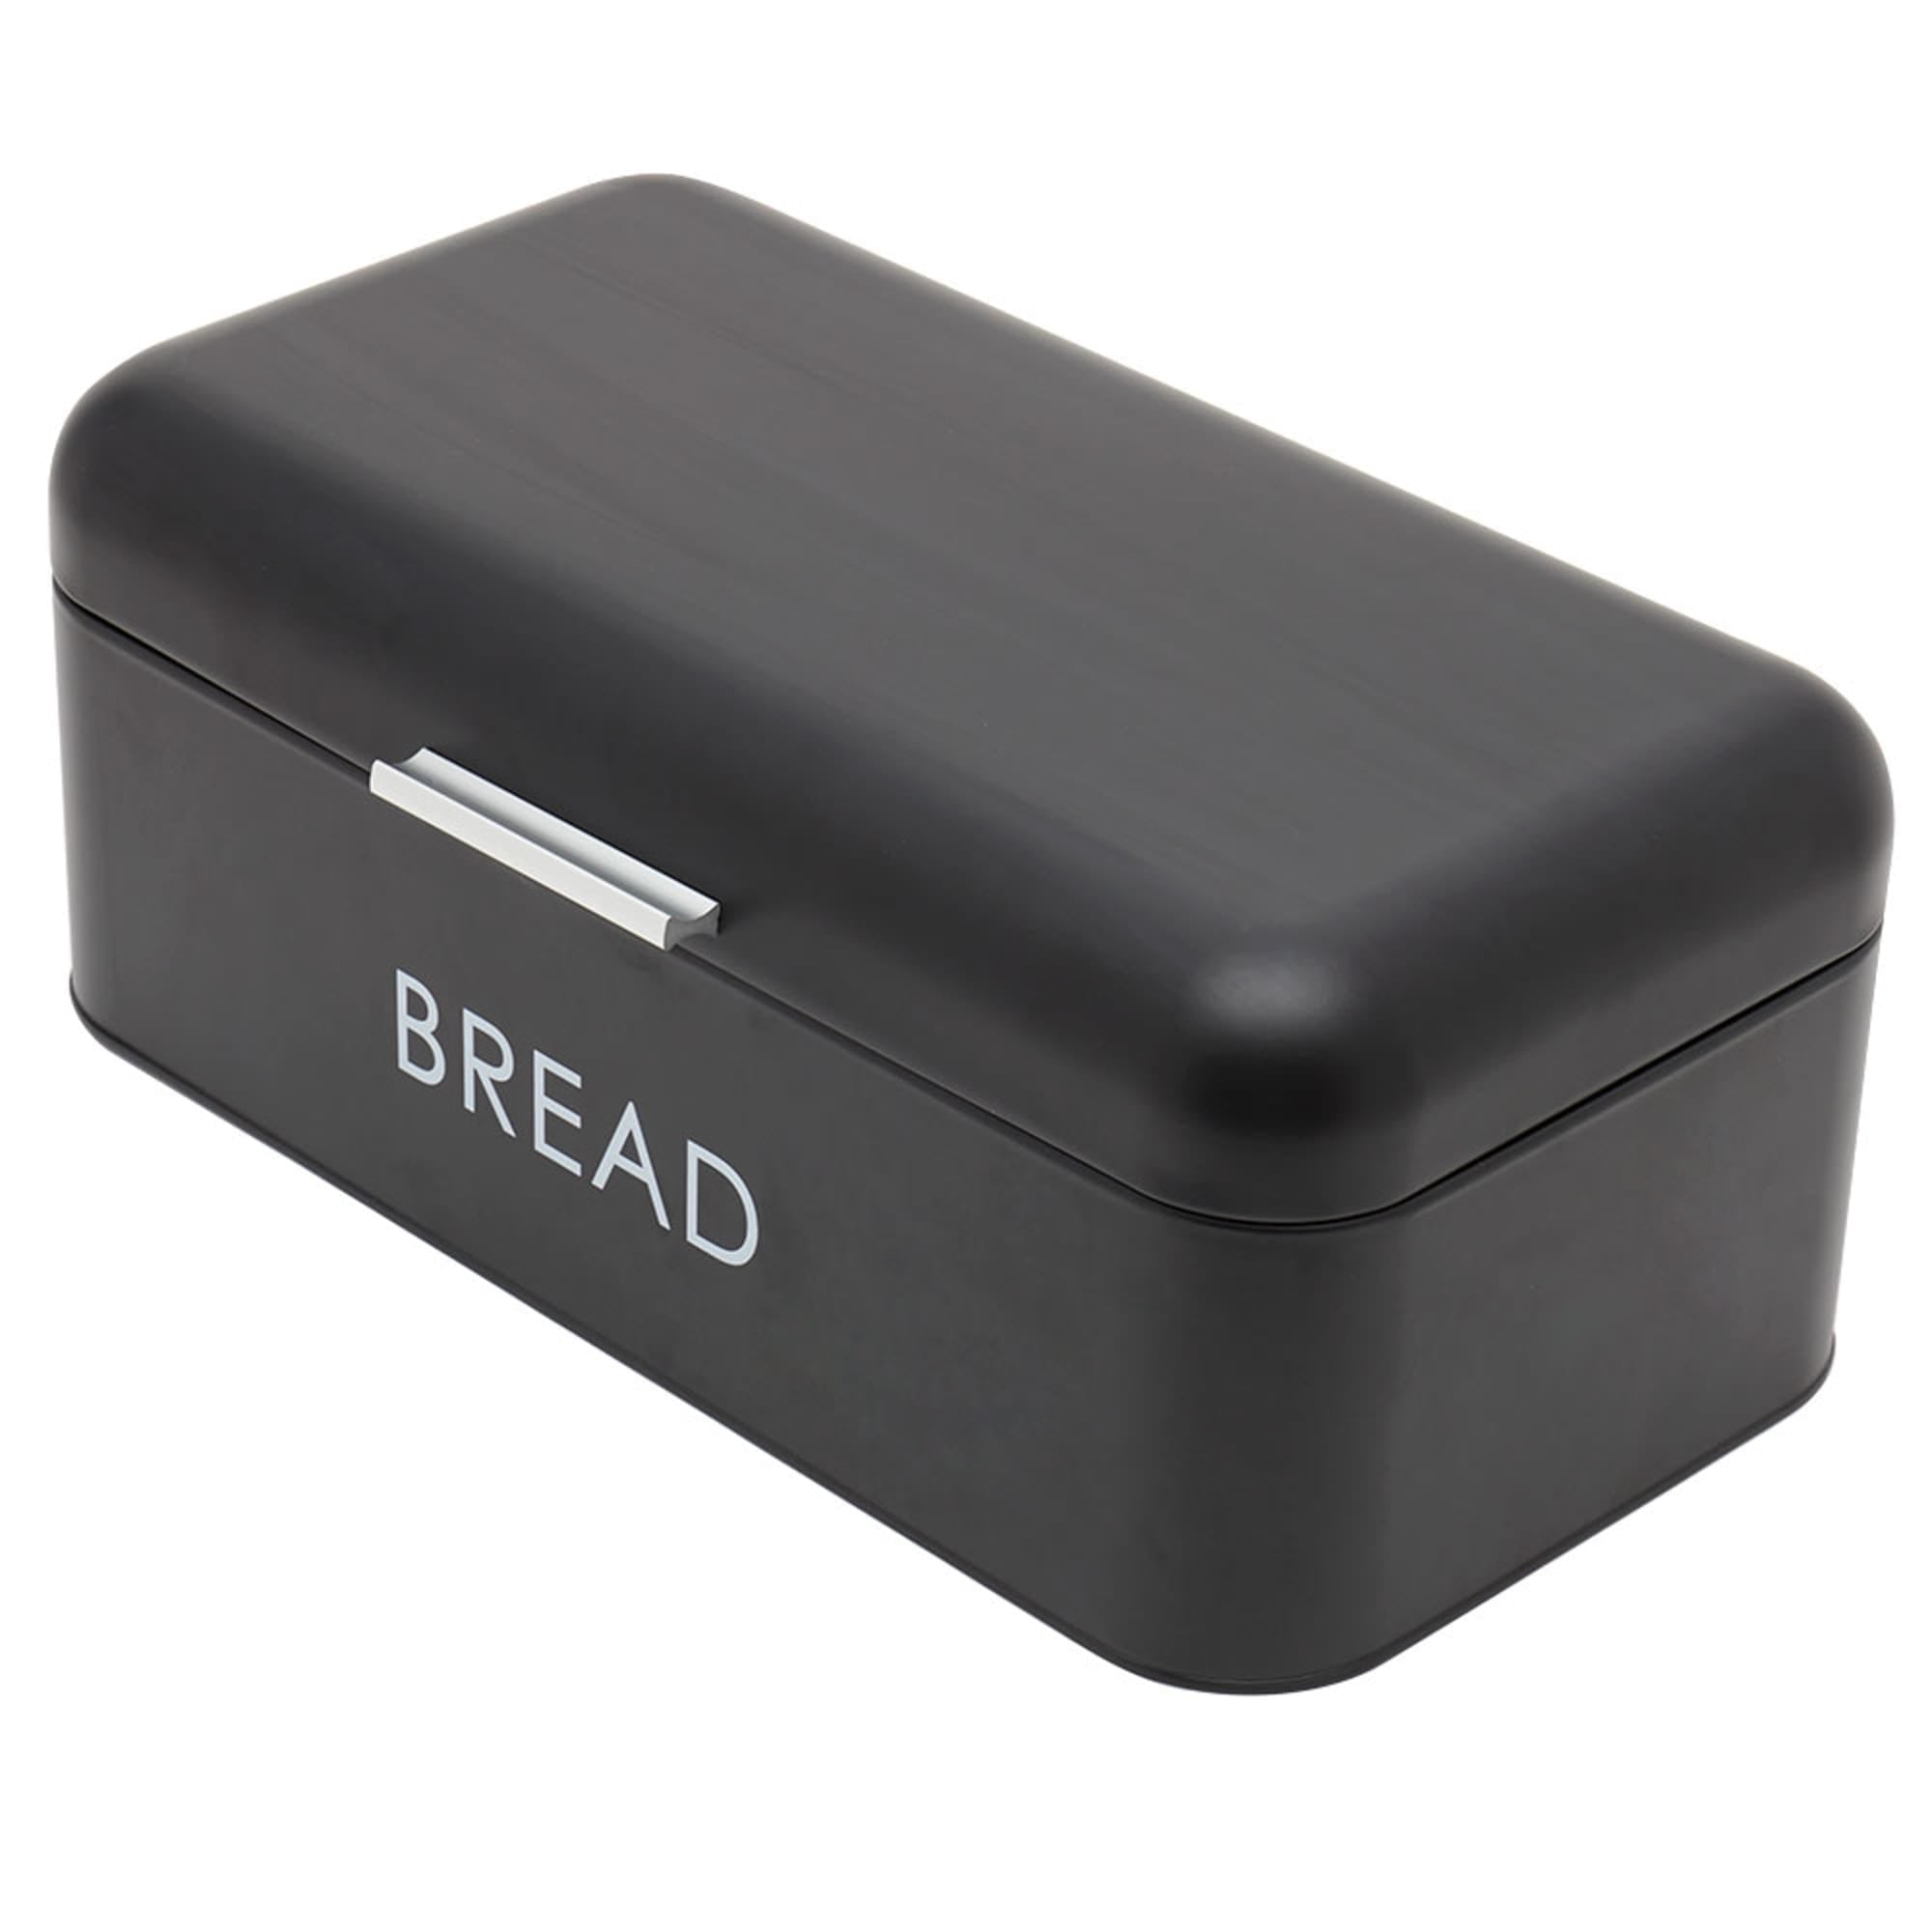 Home Basics Apex Metal Bread Box, Black $25.00 EACH, CASE PACK OF 4